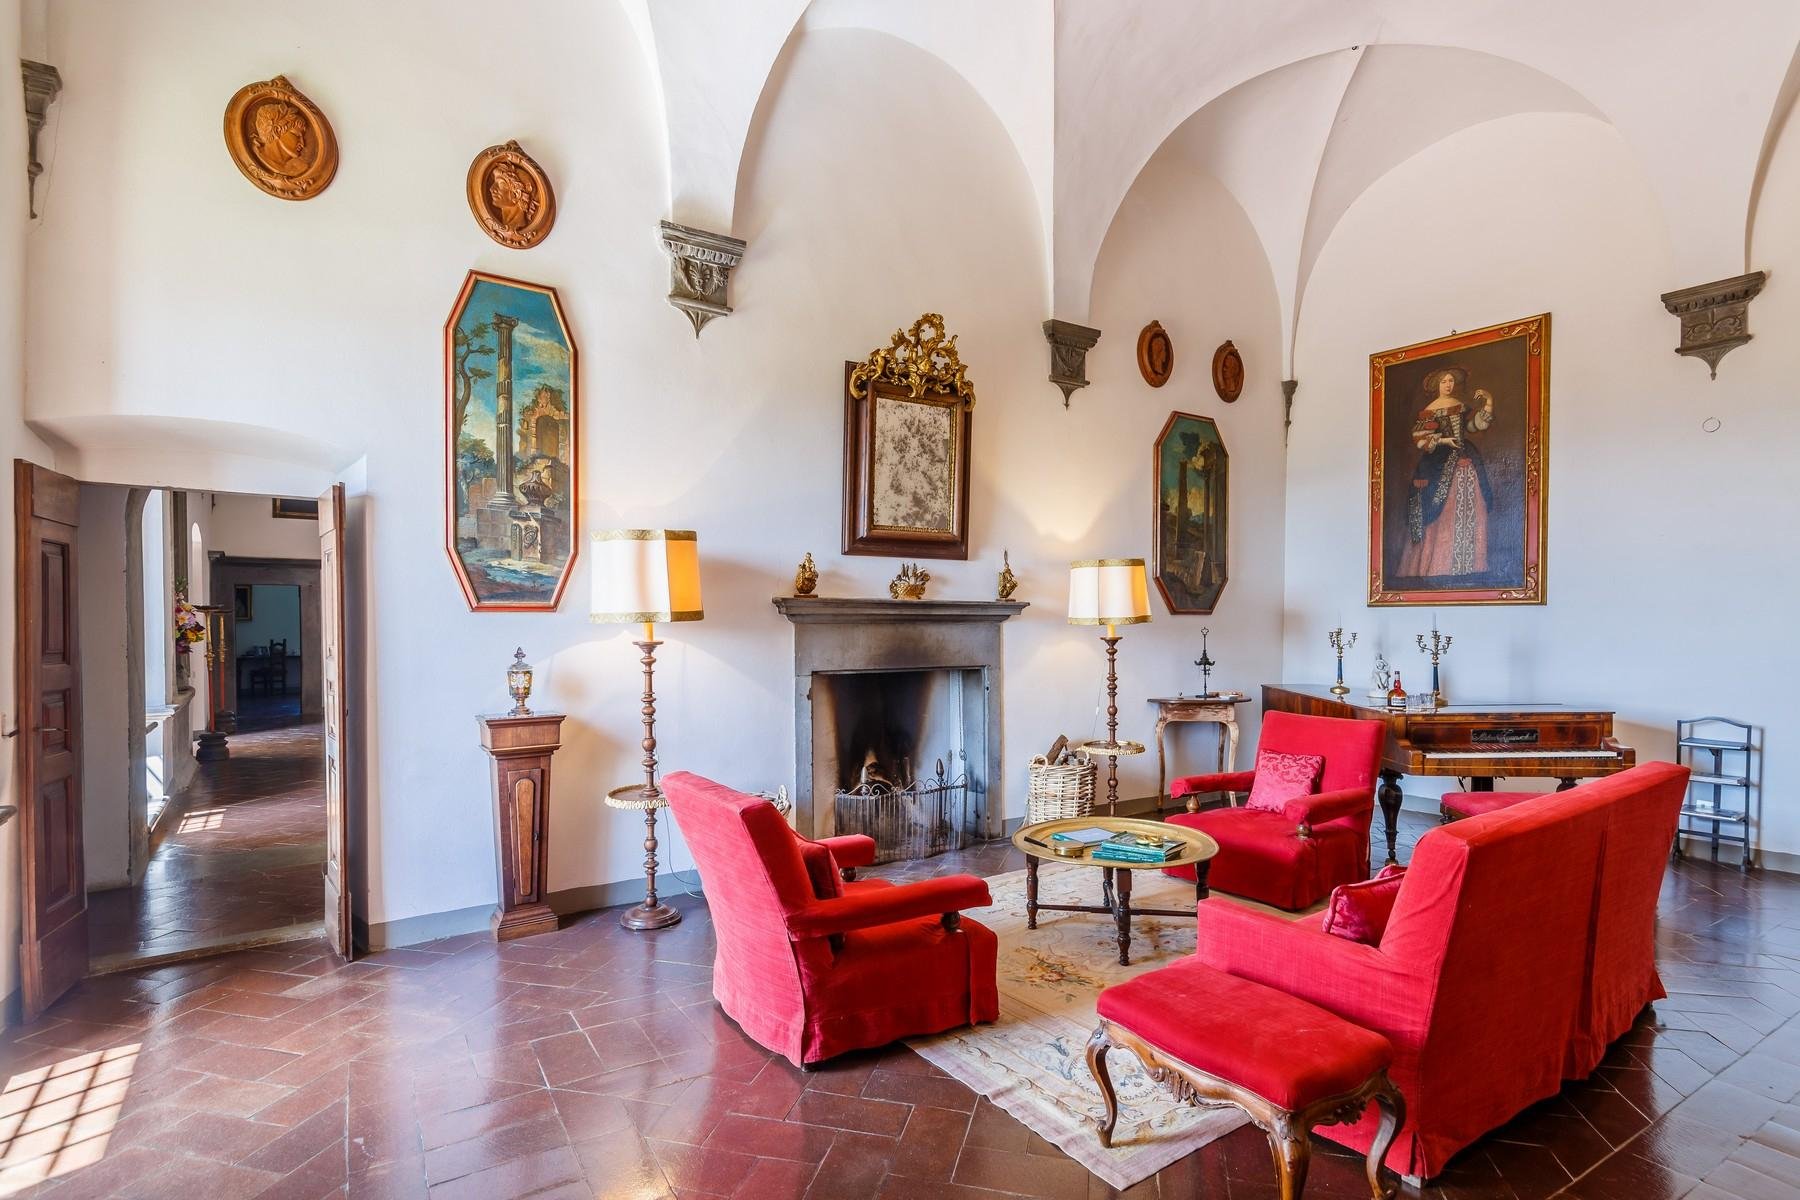 Francis York Medieval Castle Turned Renaissance Villa in Tuscany, Italy  00018.jpg